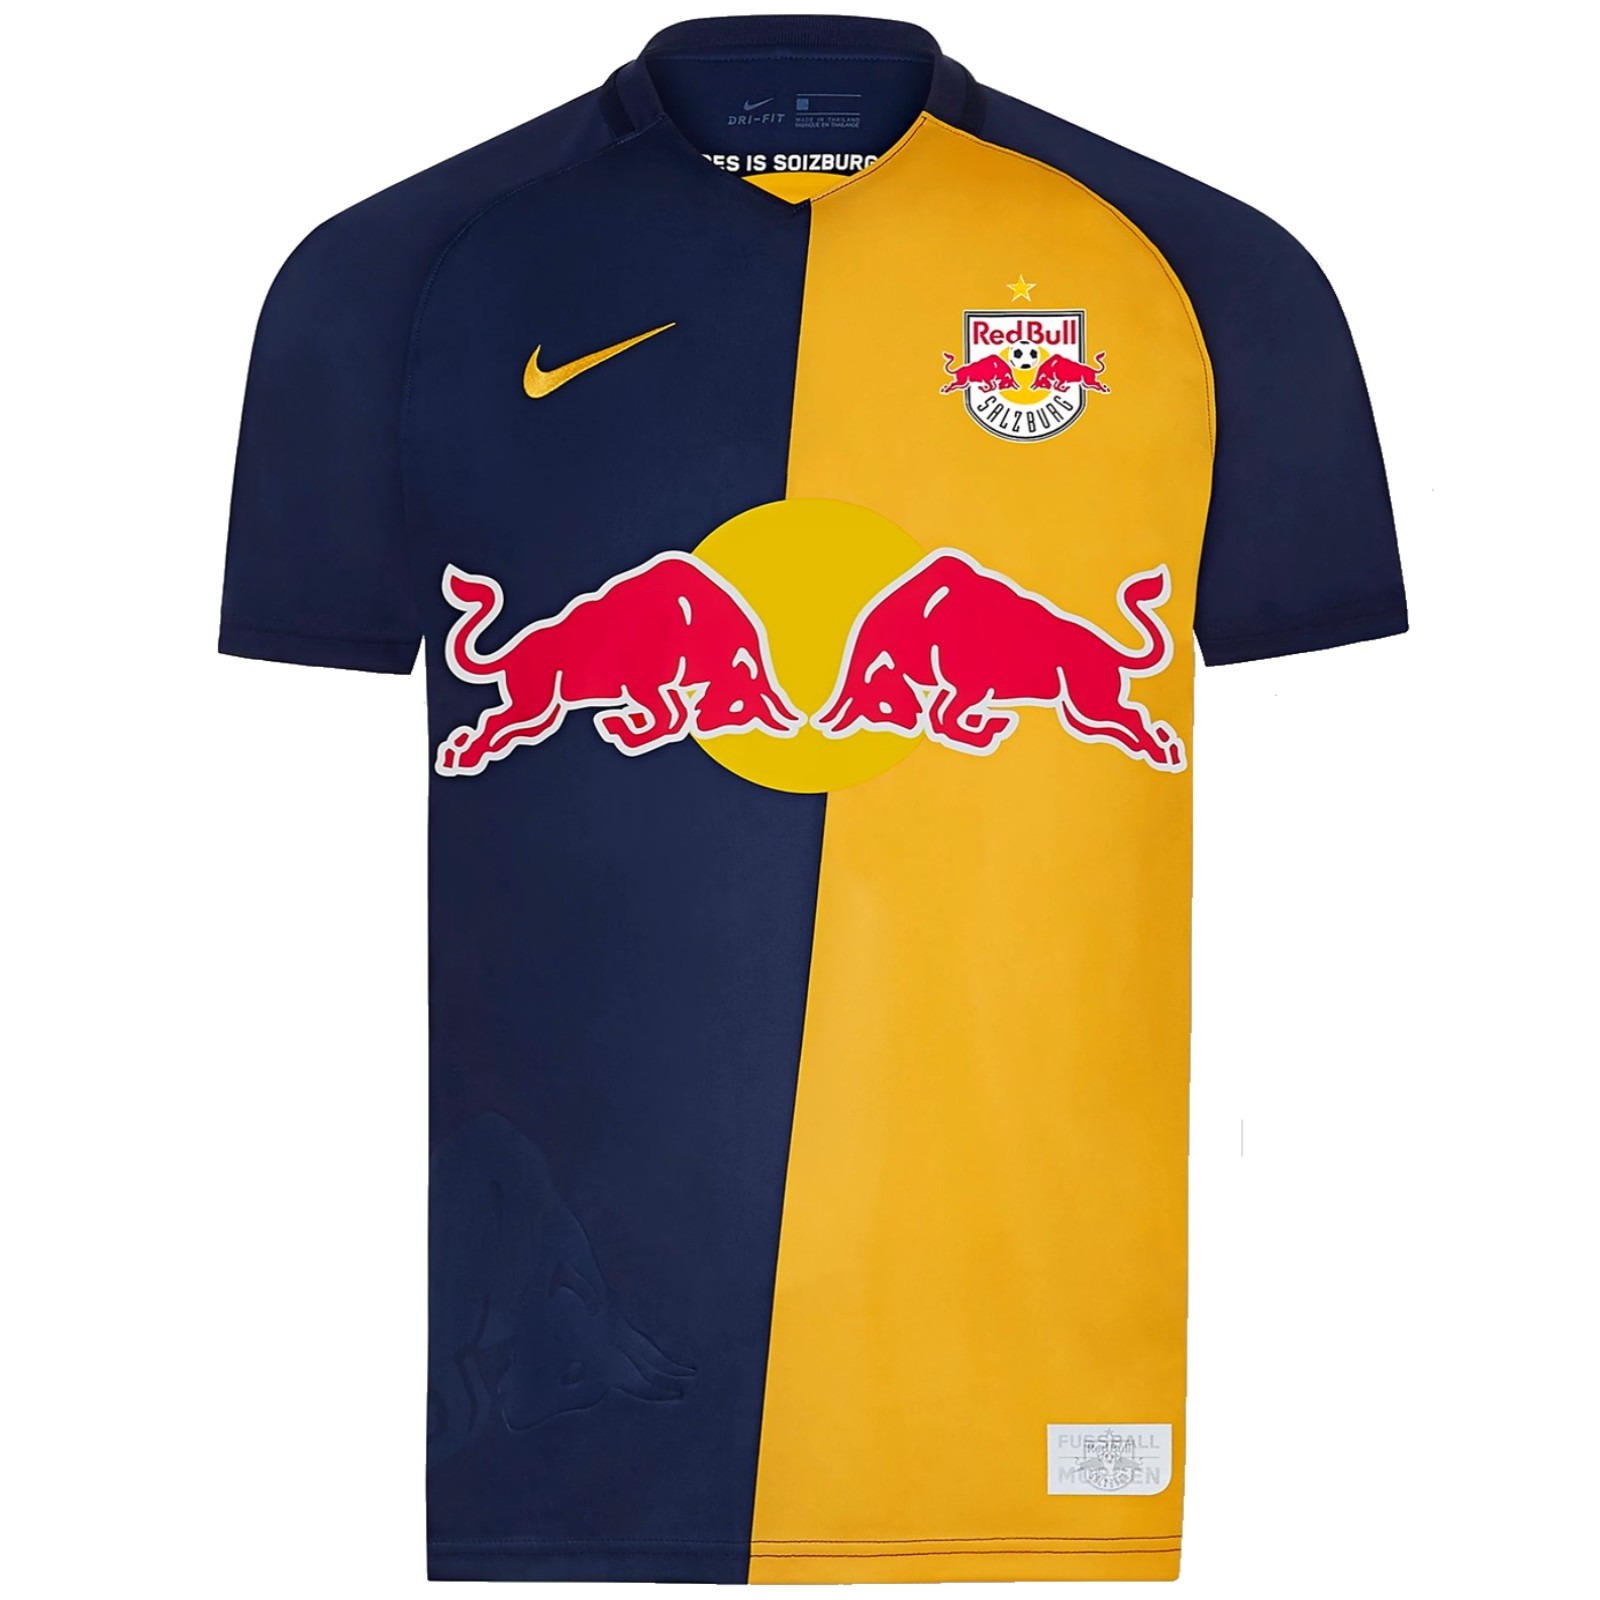 FC Red Bull Salzburg - Official Red Bull Online Shop